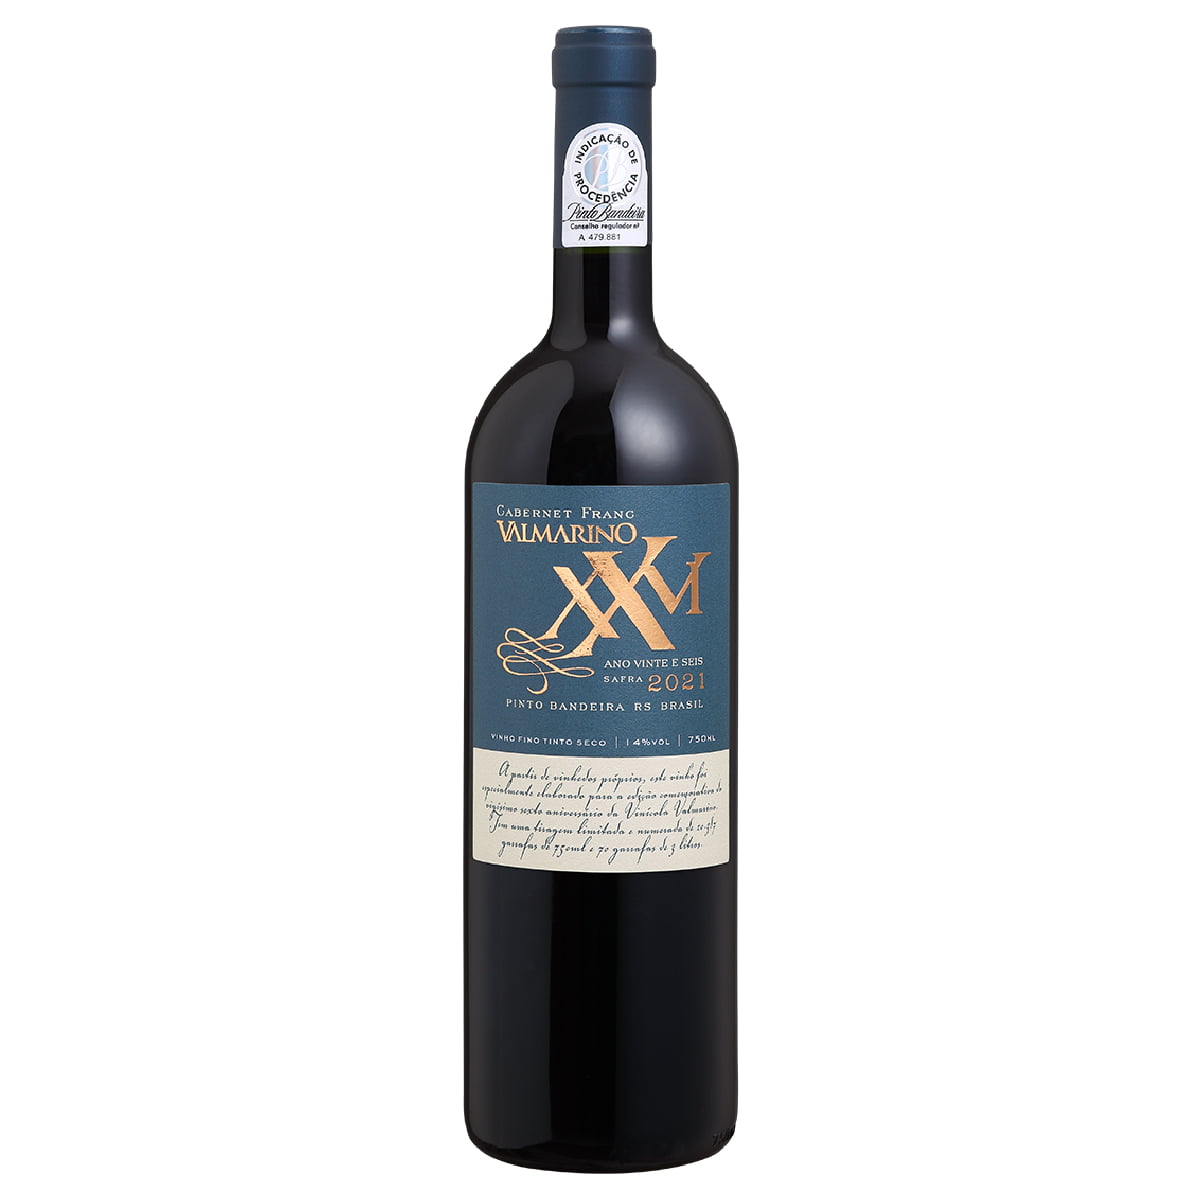 Vinho Valmarino XXVI Cabernet Franc Tinto Seco 750ml